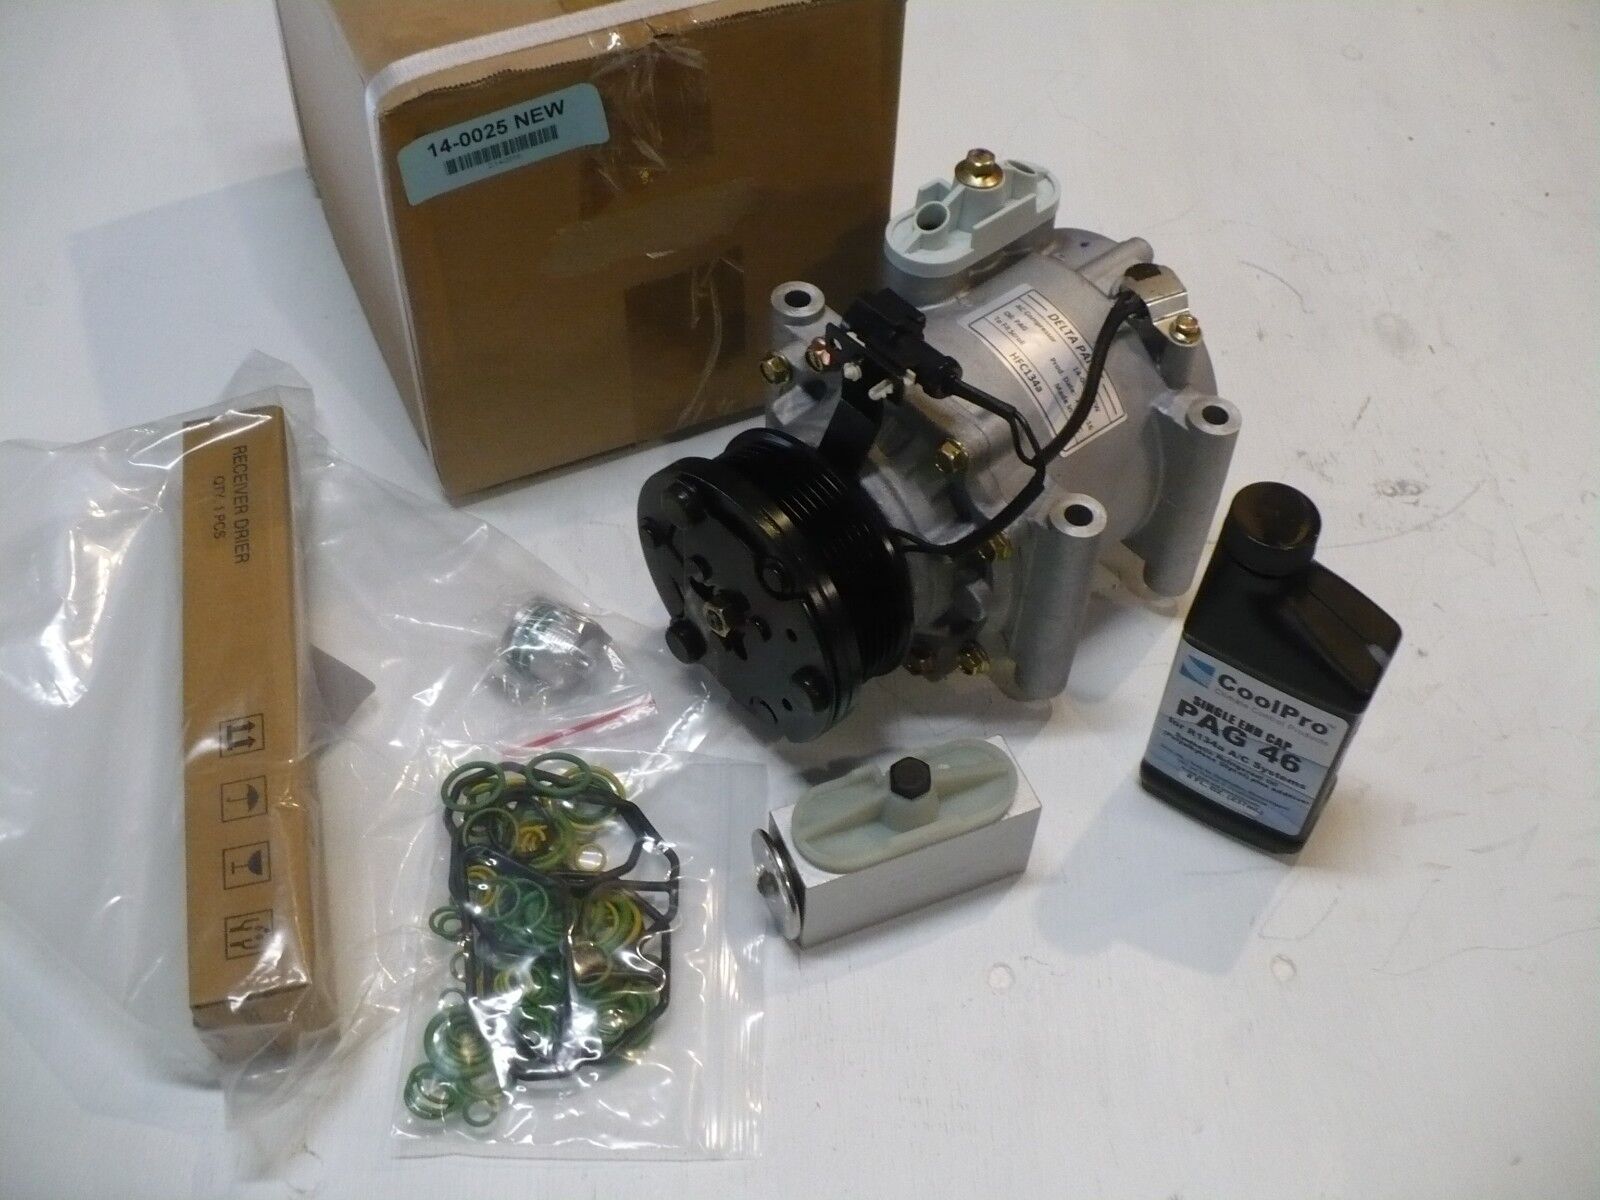 14-0025 A/C AC Compressor Kit for 2003-2008 Jaguar S-Type 4.2L only